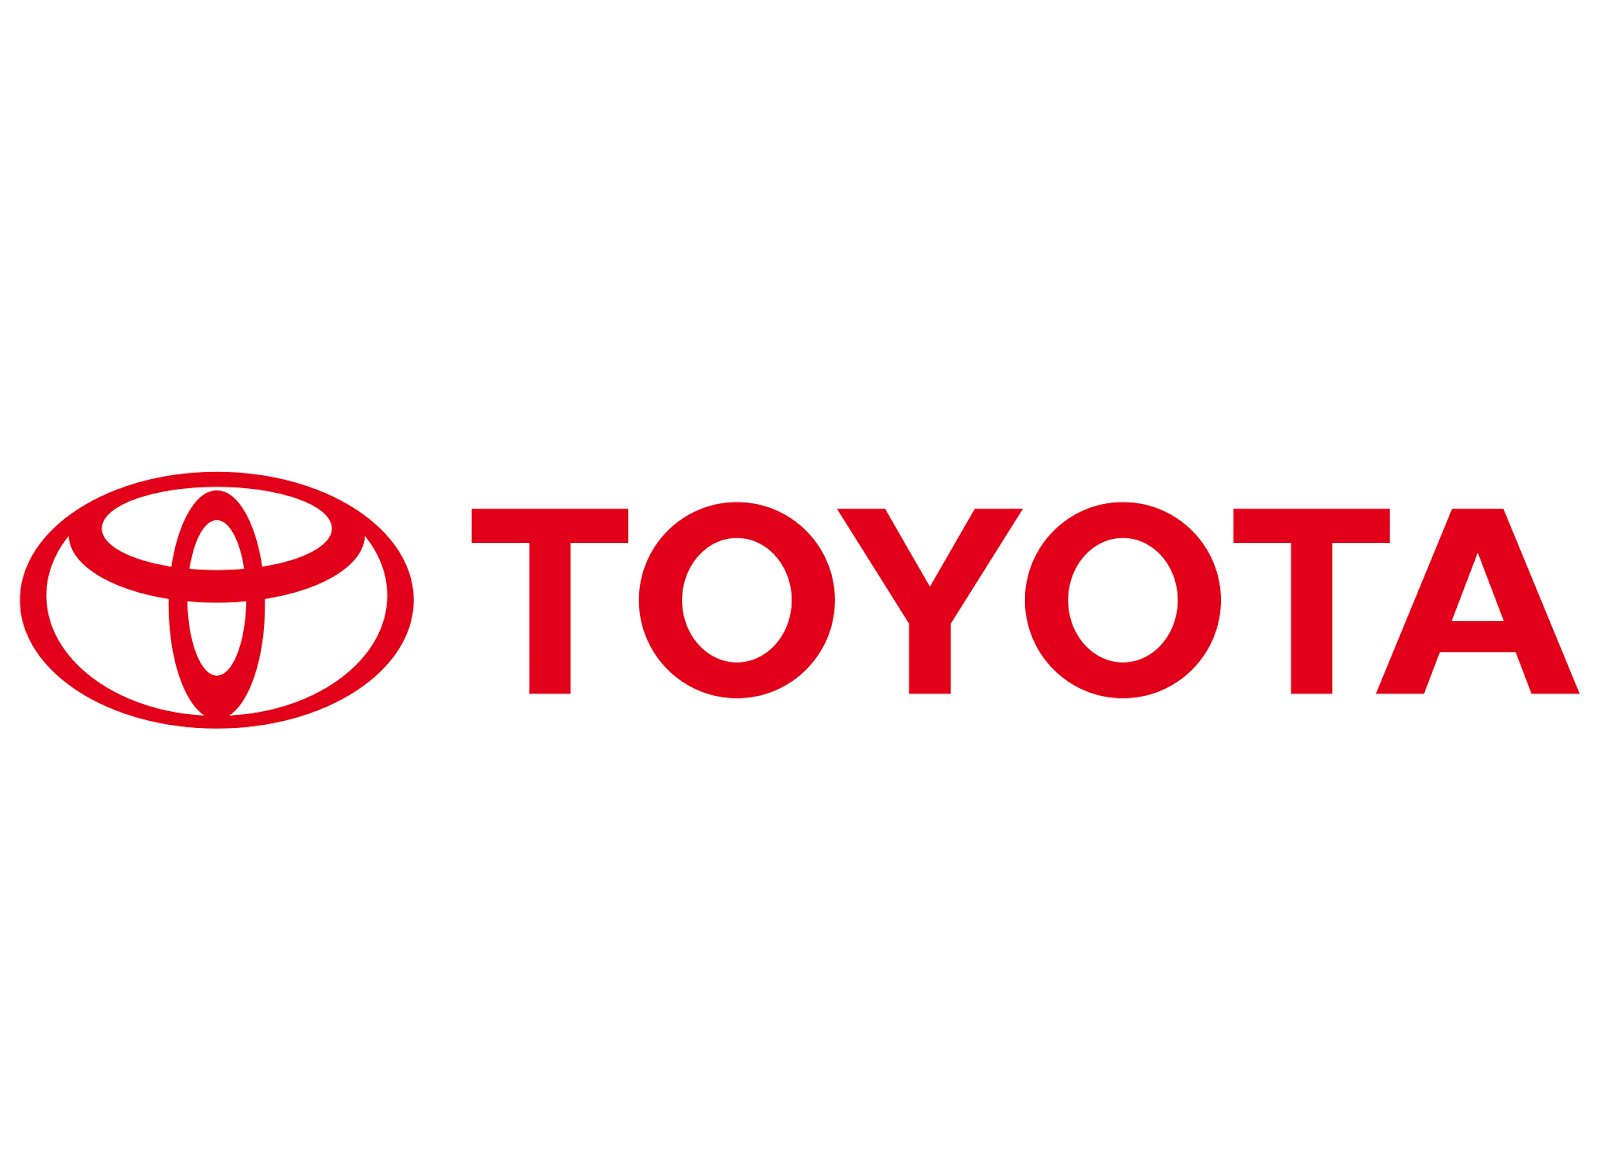 Toyota Kentucky Logo - Toyota MENCS Kentucky Kyle Busch Quotes - 7.13.18 | CupScene.com